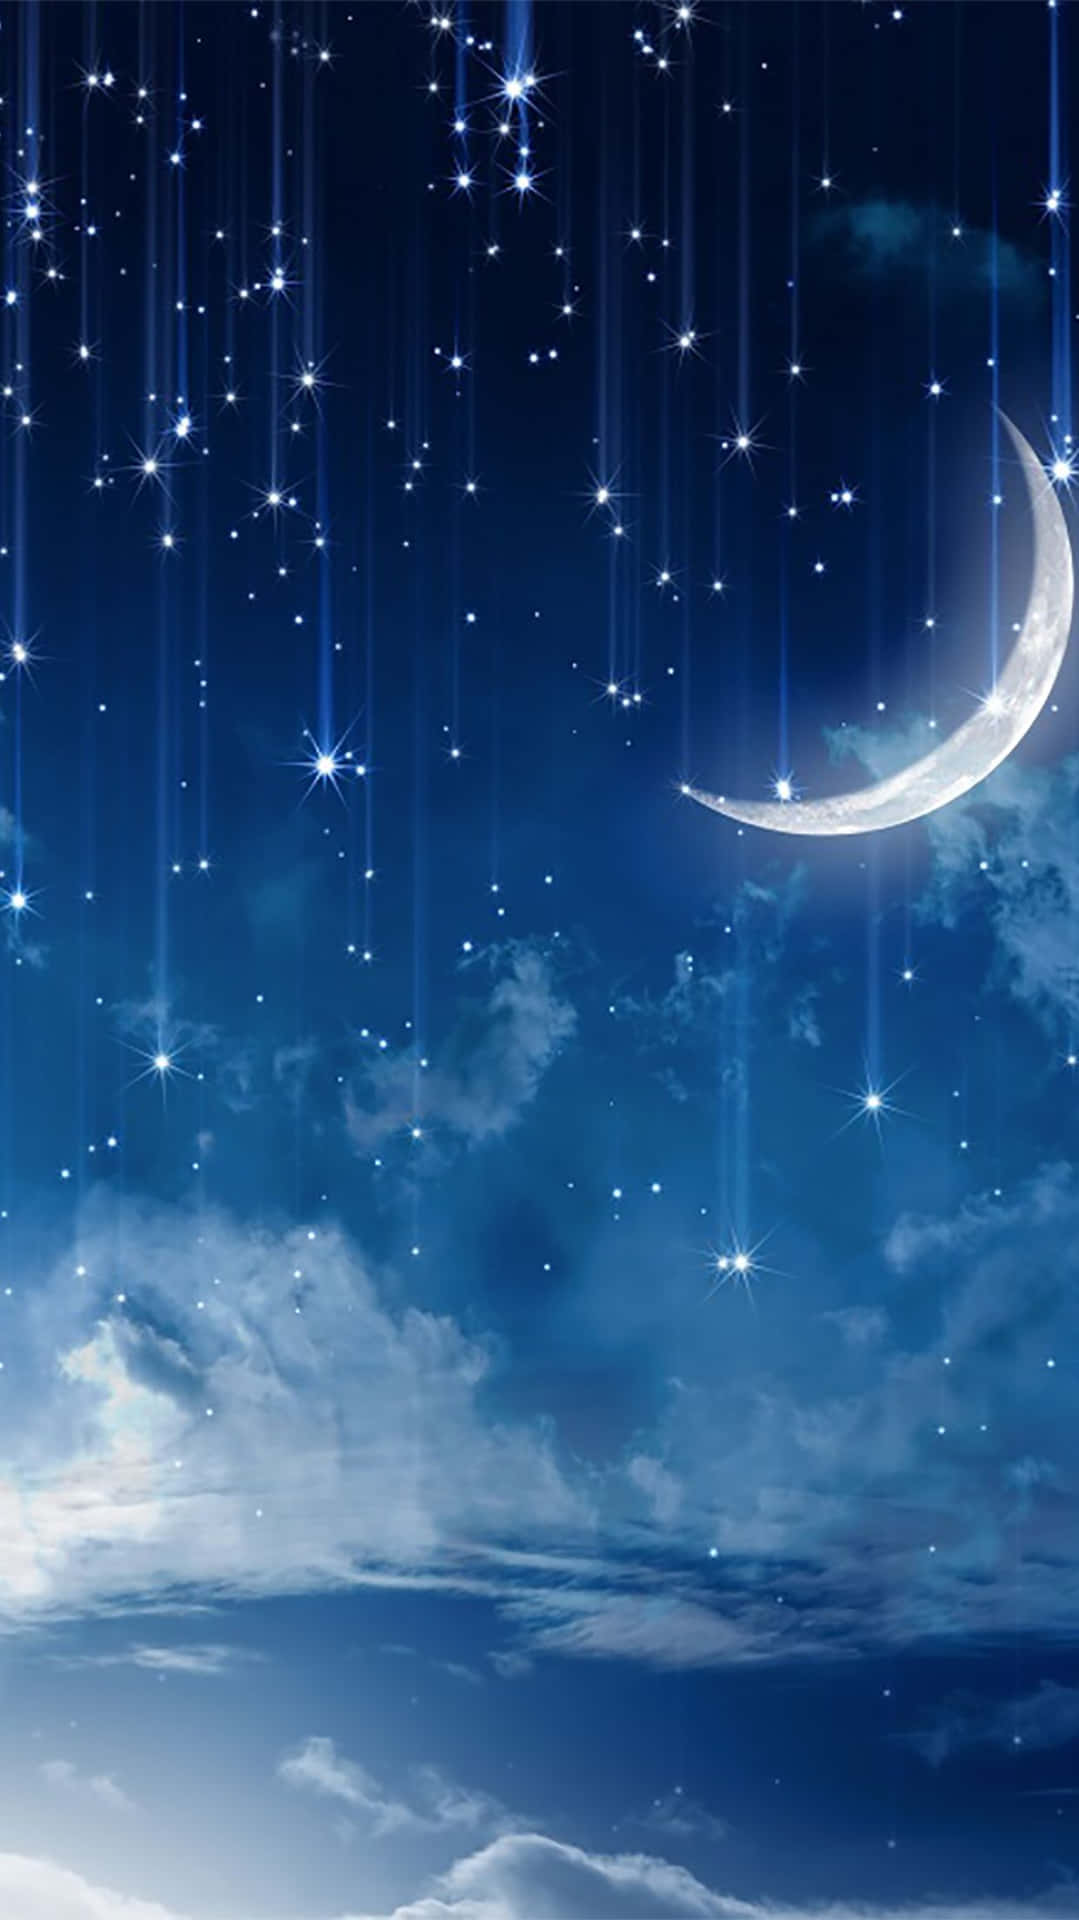 HD wallpaper Artistic Fantasy Fence Moon Shed Stars Tree night sky   Wallpaper Flare